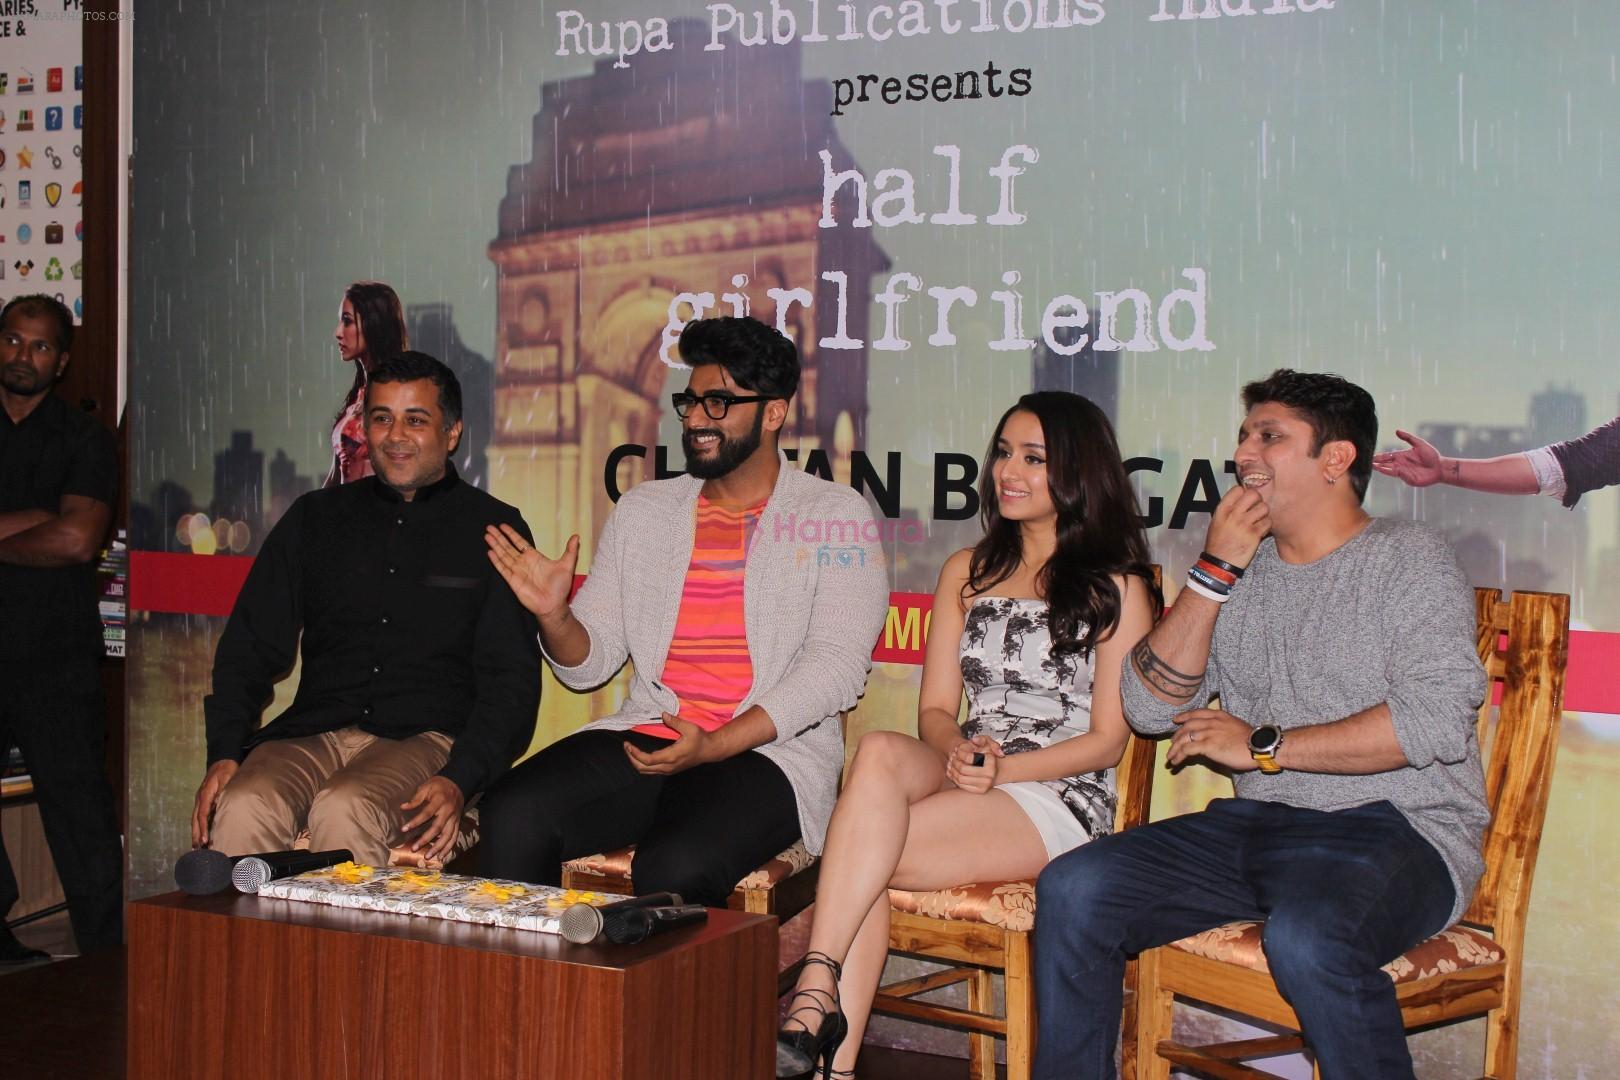 Arjun Kapoor, Shraddha Kapoor, Mohit Suri, Chetan Bhagat at The Book Launch Of Half Girlfriend on 8th May 2017